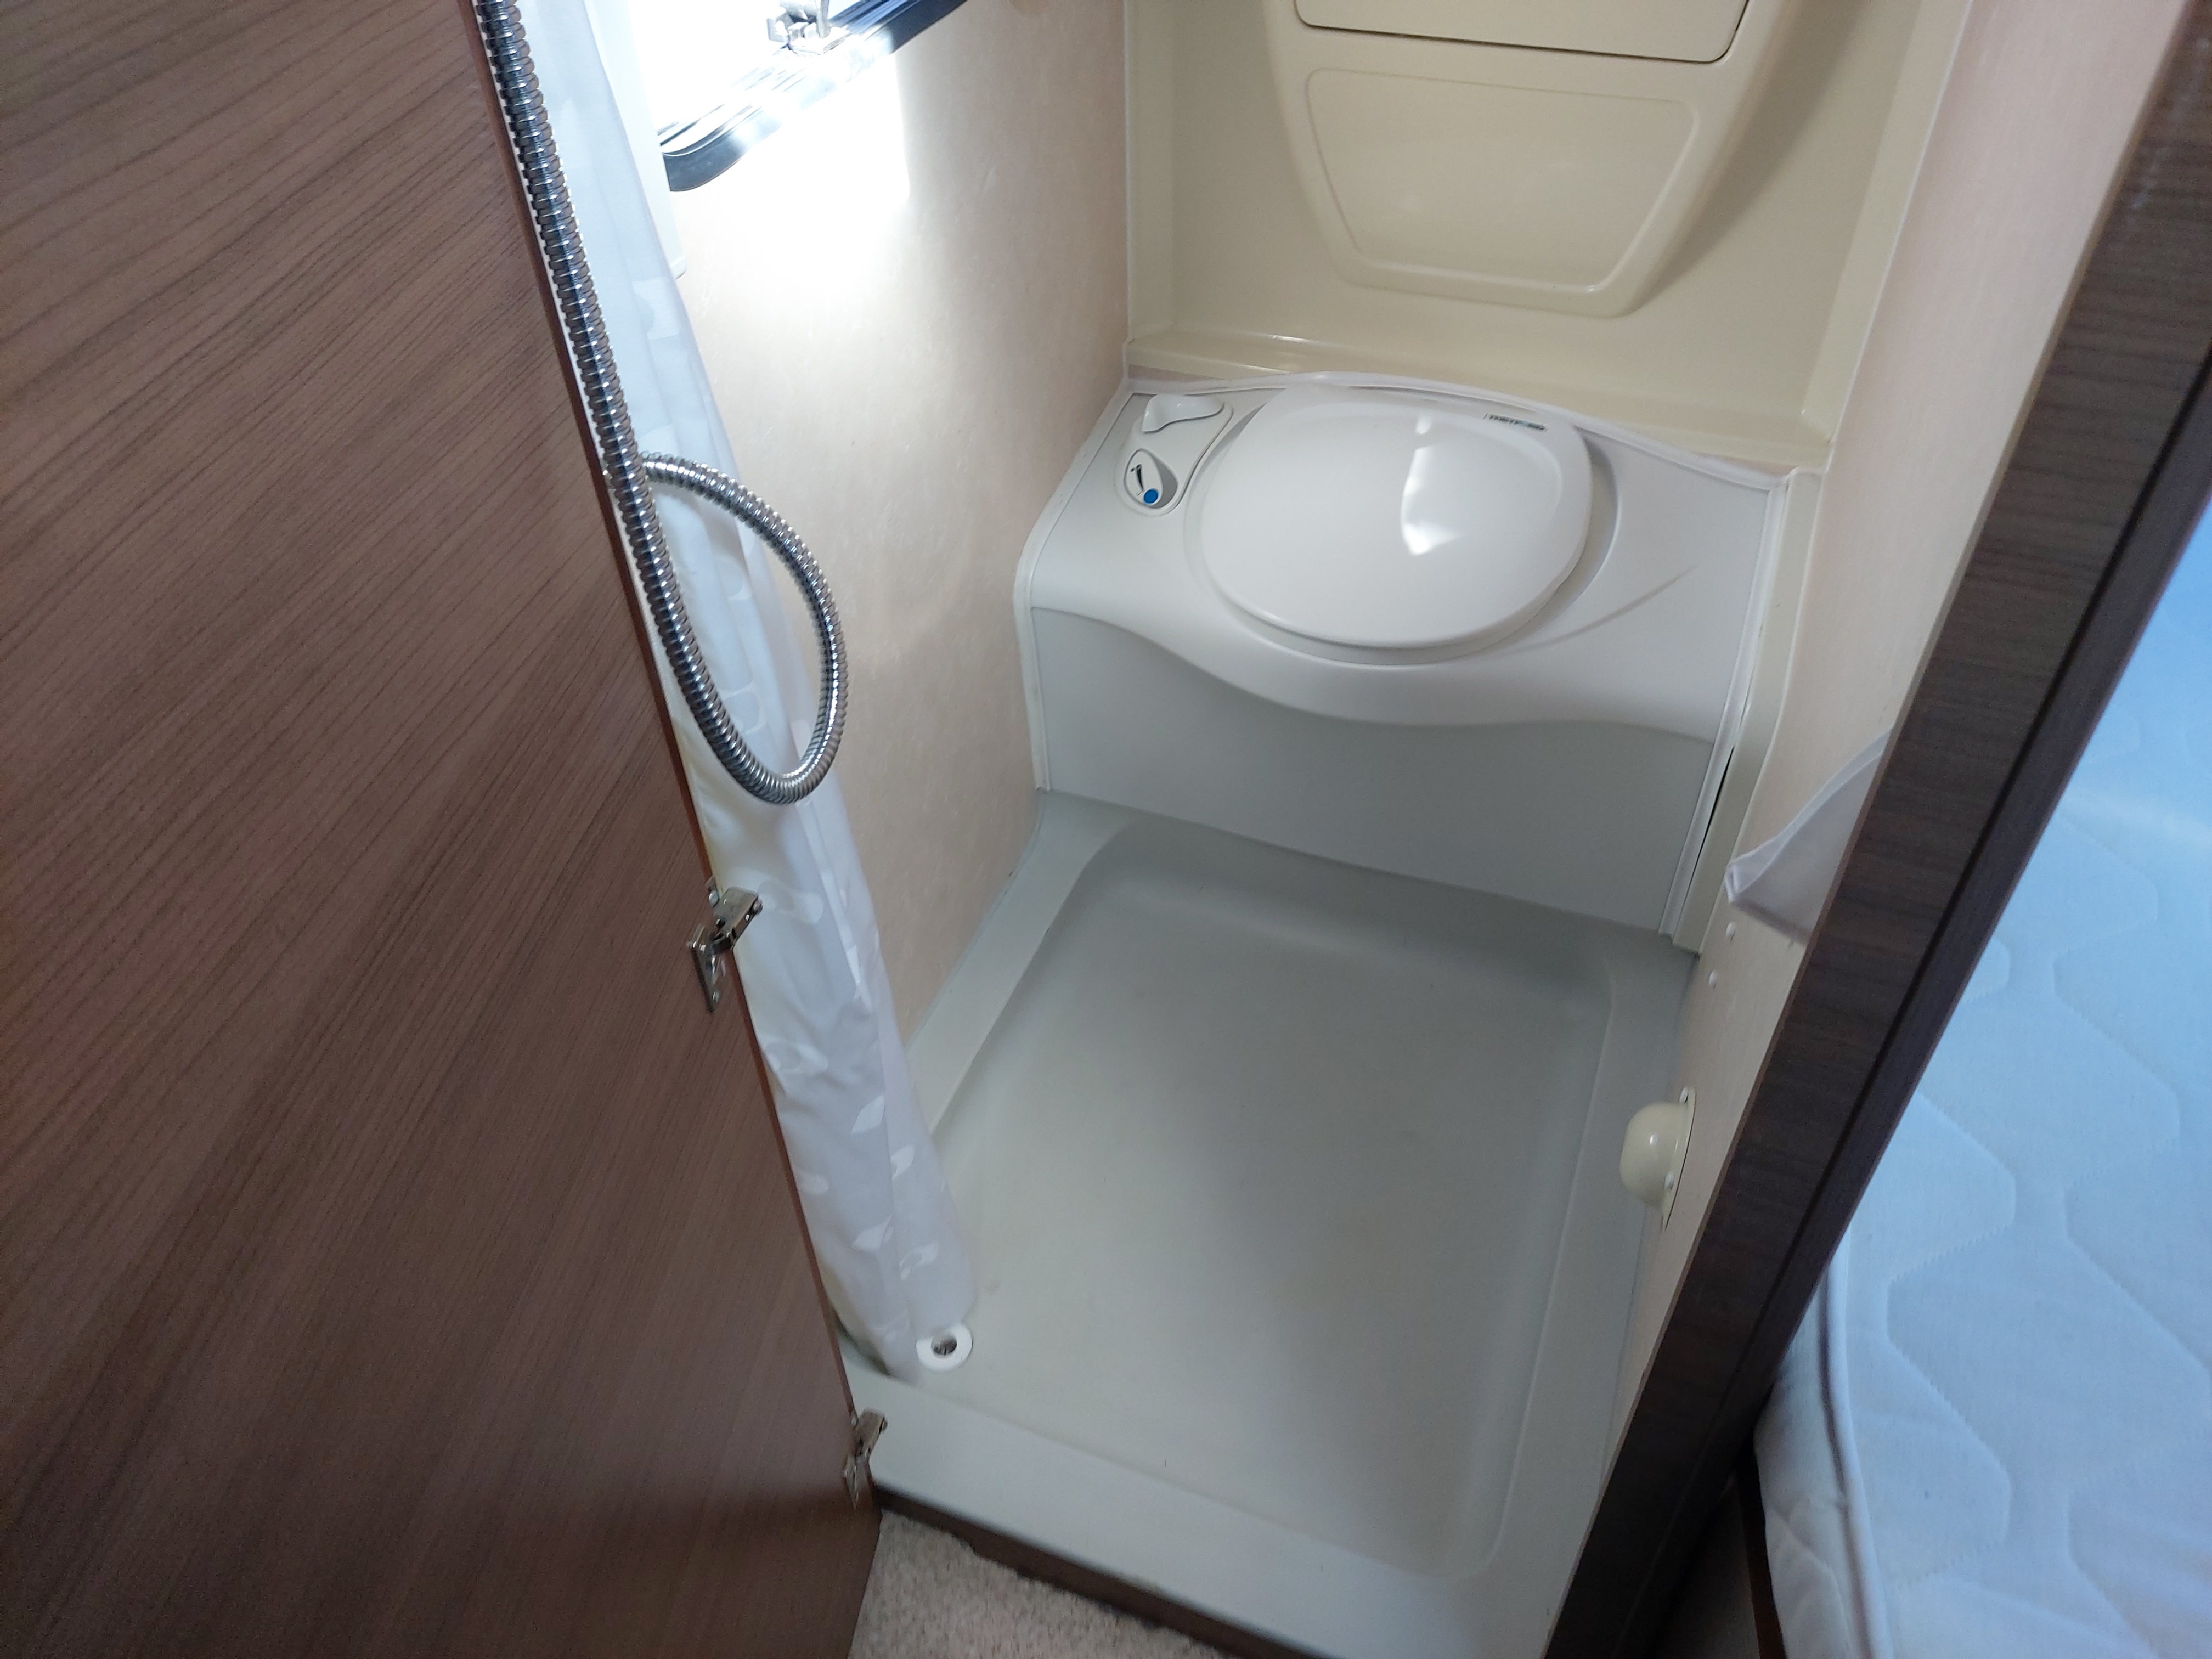 NOW SOLD 2009 Adria Adiva 552PH Fixed Bed Side Washroom Caravan